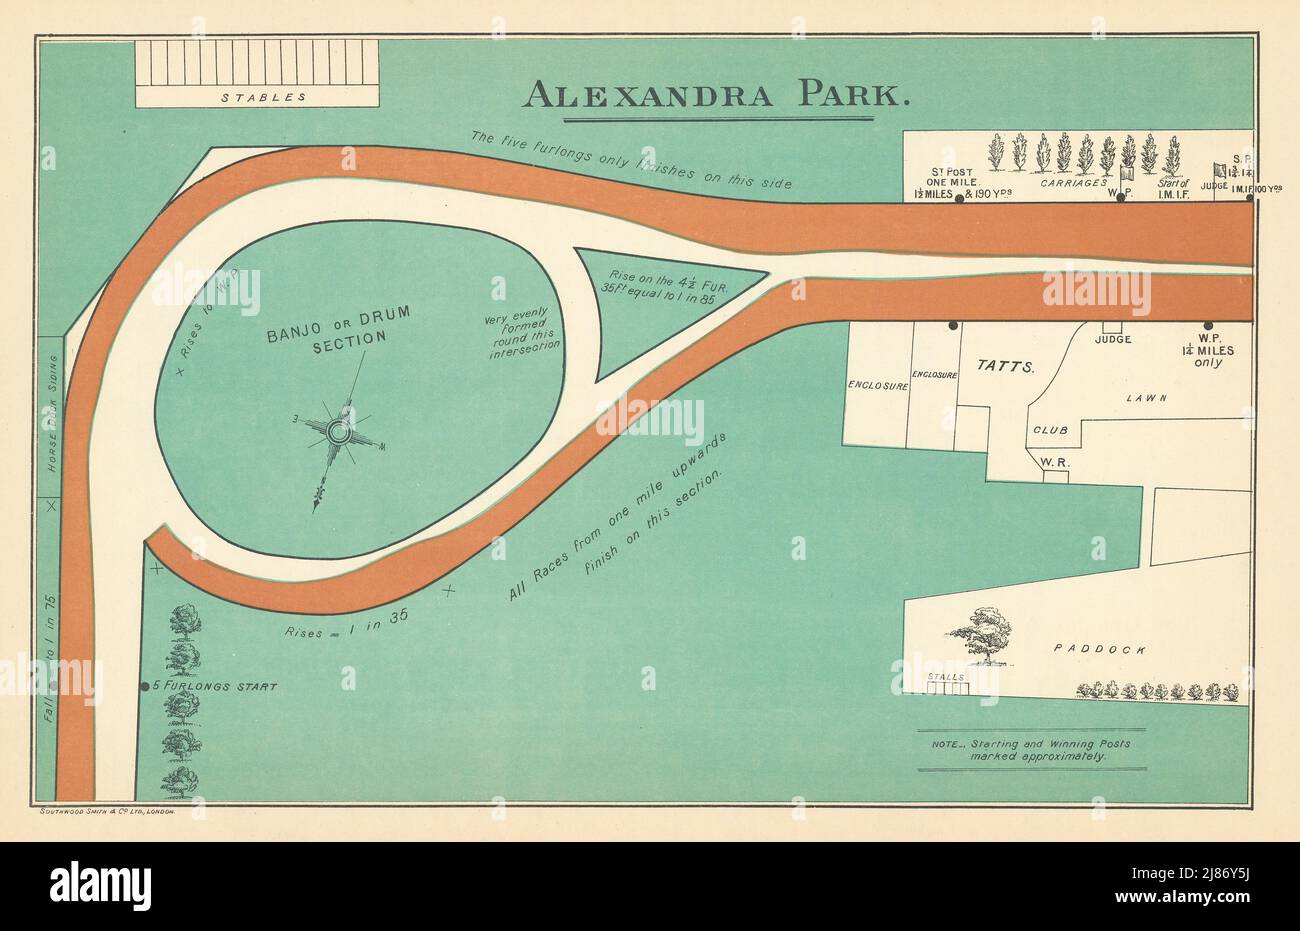 Alexandra Park racecourse, London. Closed 1970. BAYLES 1903 old antique map Stock Photo